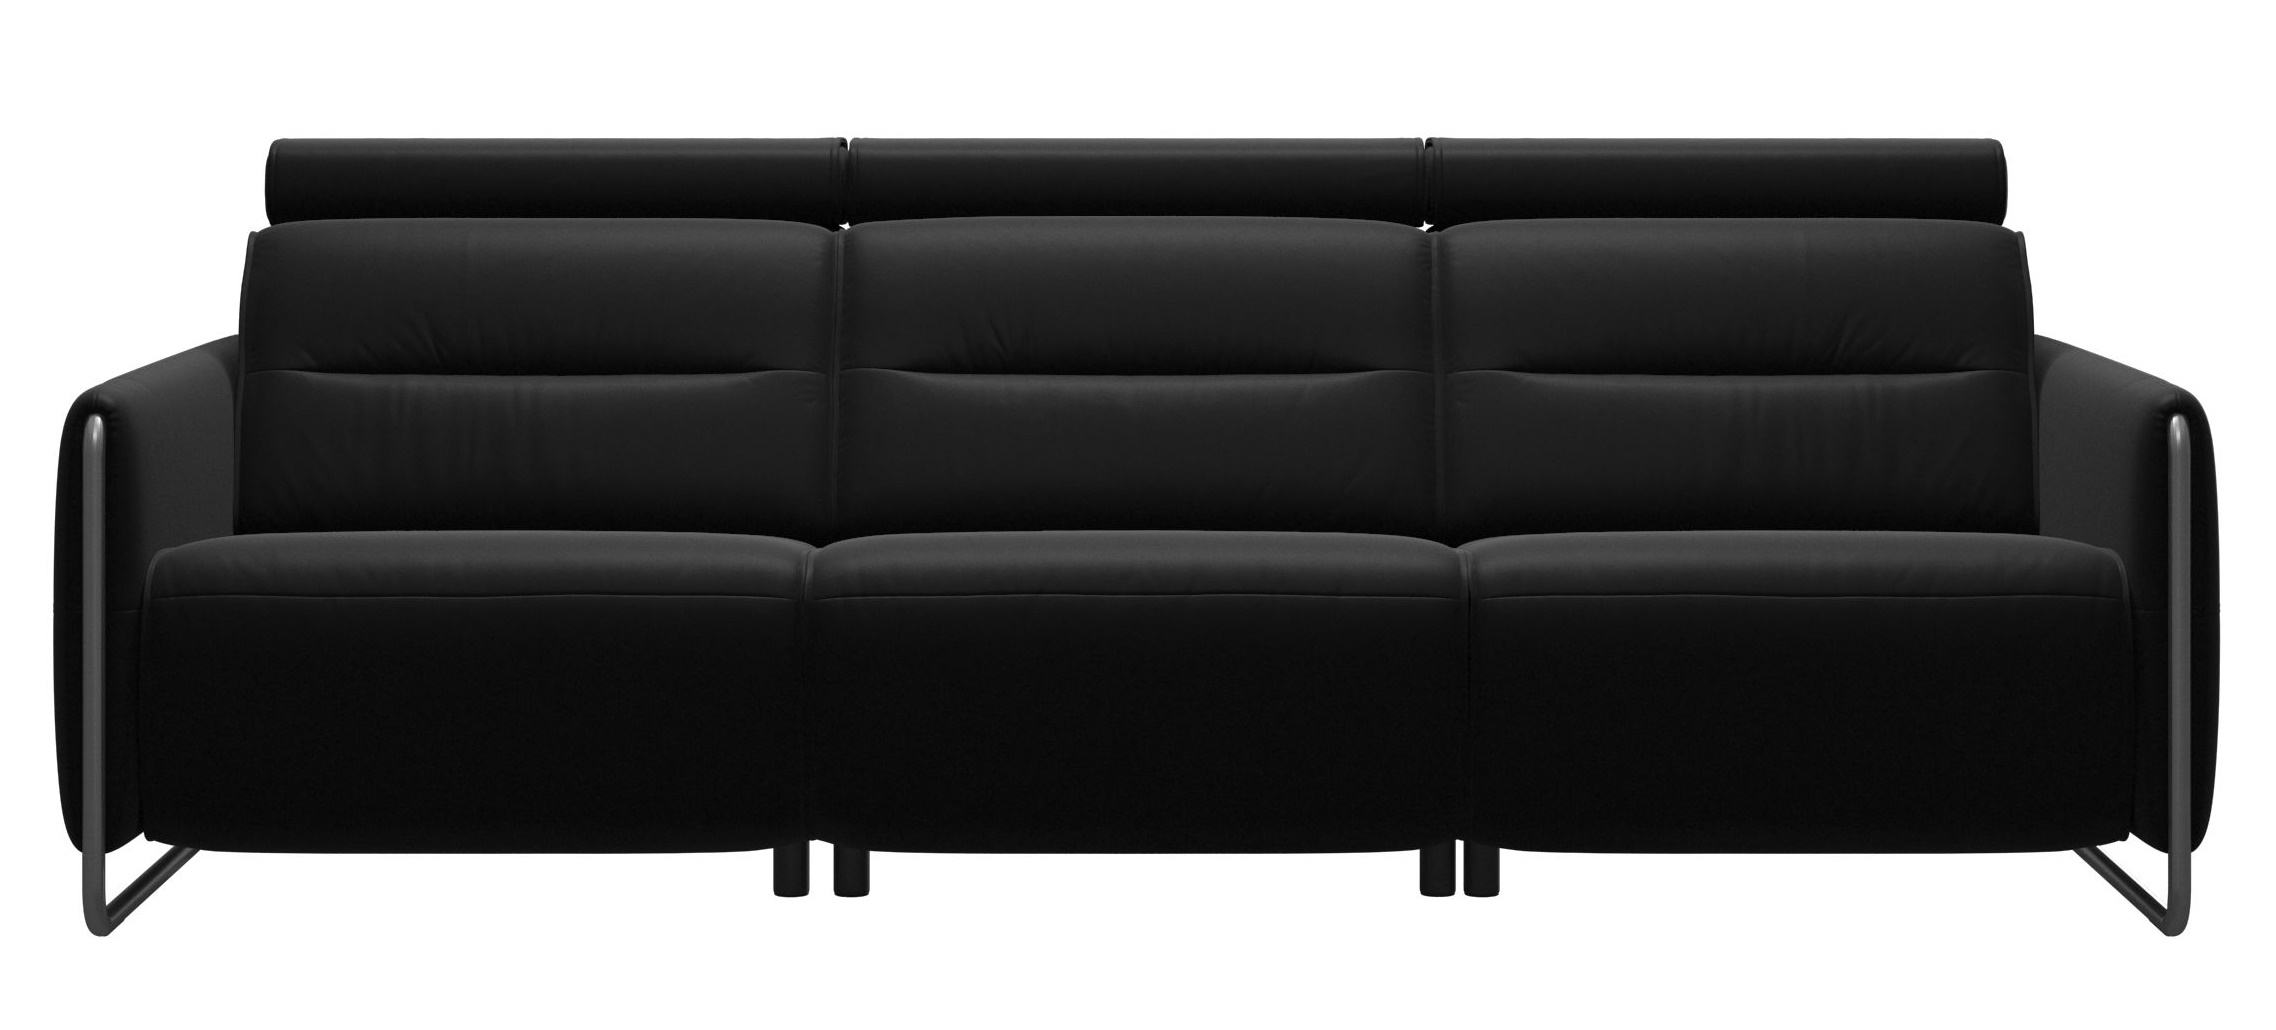 Canapea cu 3 locuri Stressless Emily Arm Steel reclinere laterale brate crom tapiterie piele Batick Black Arm imagine model 2022